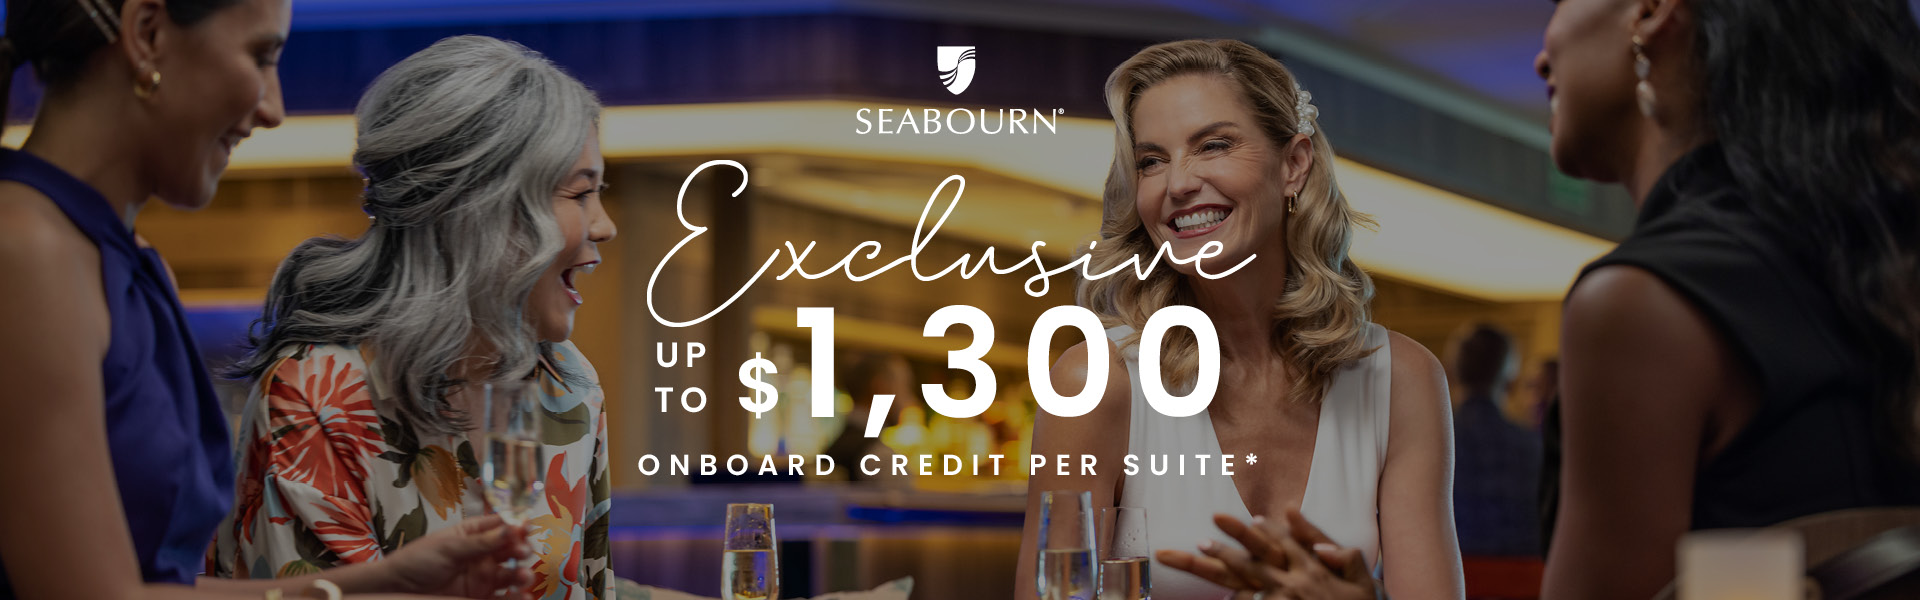 Seabourn Exclusive - Panache Cruises